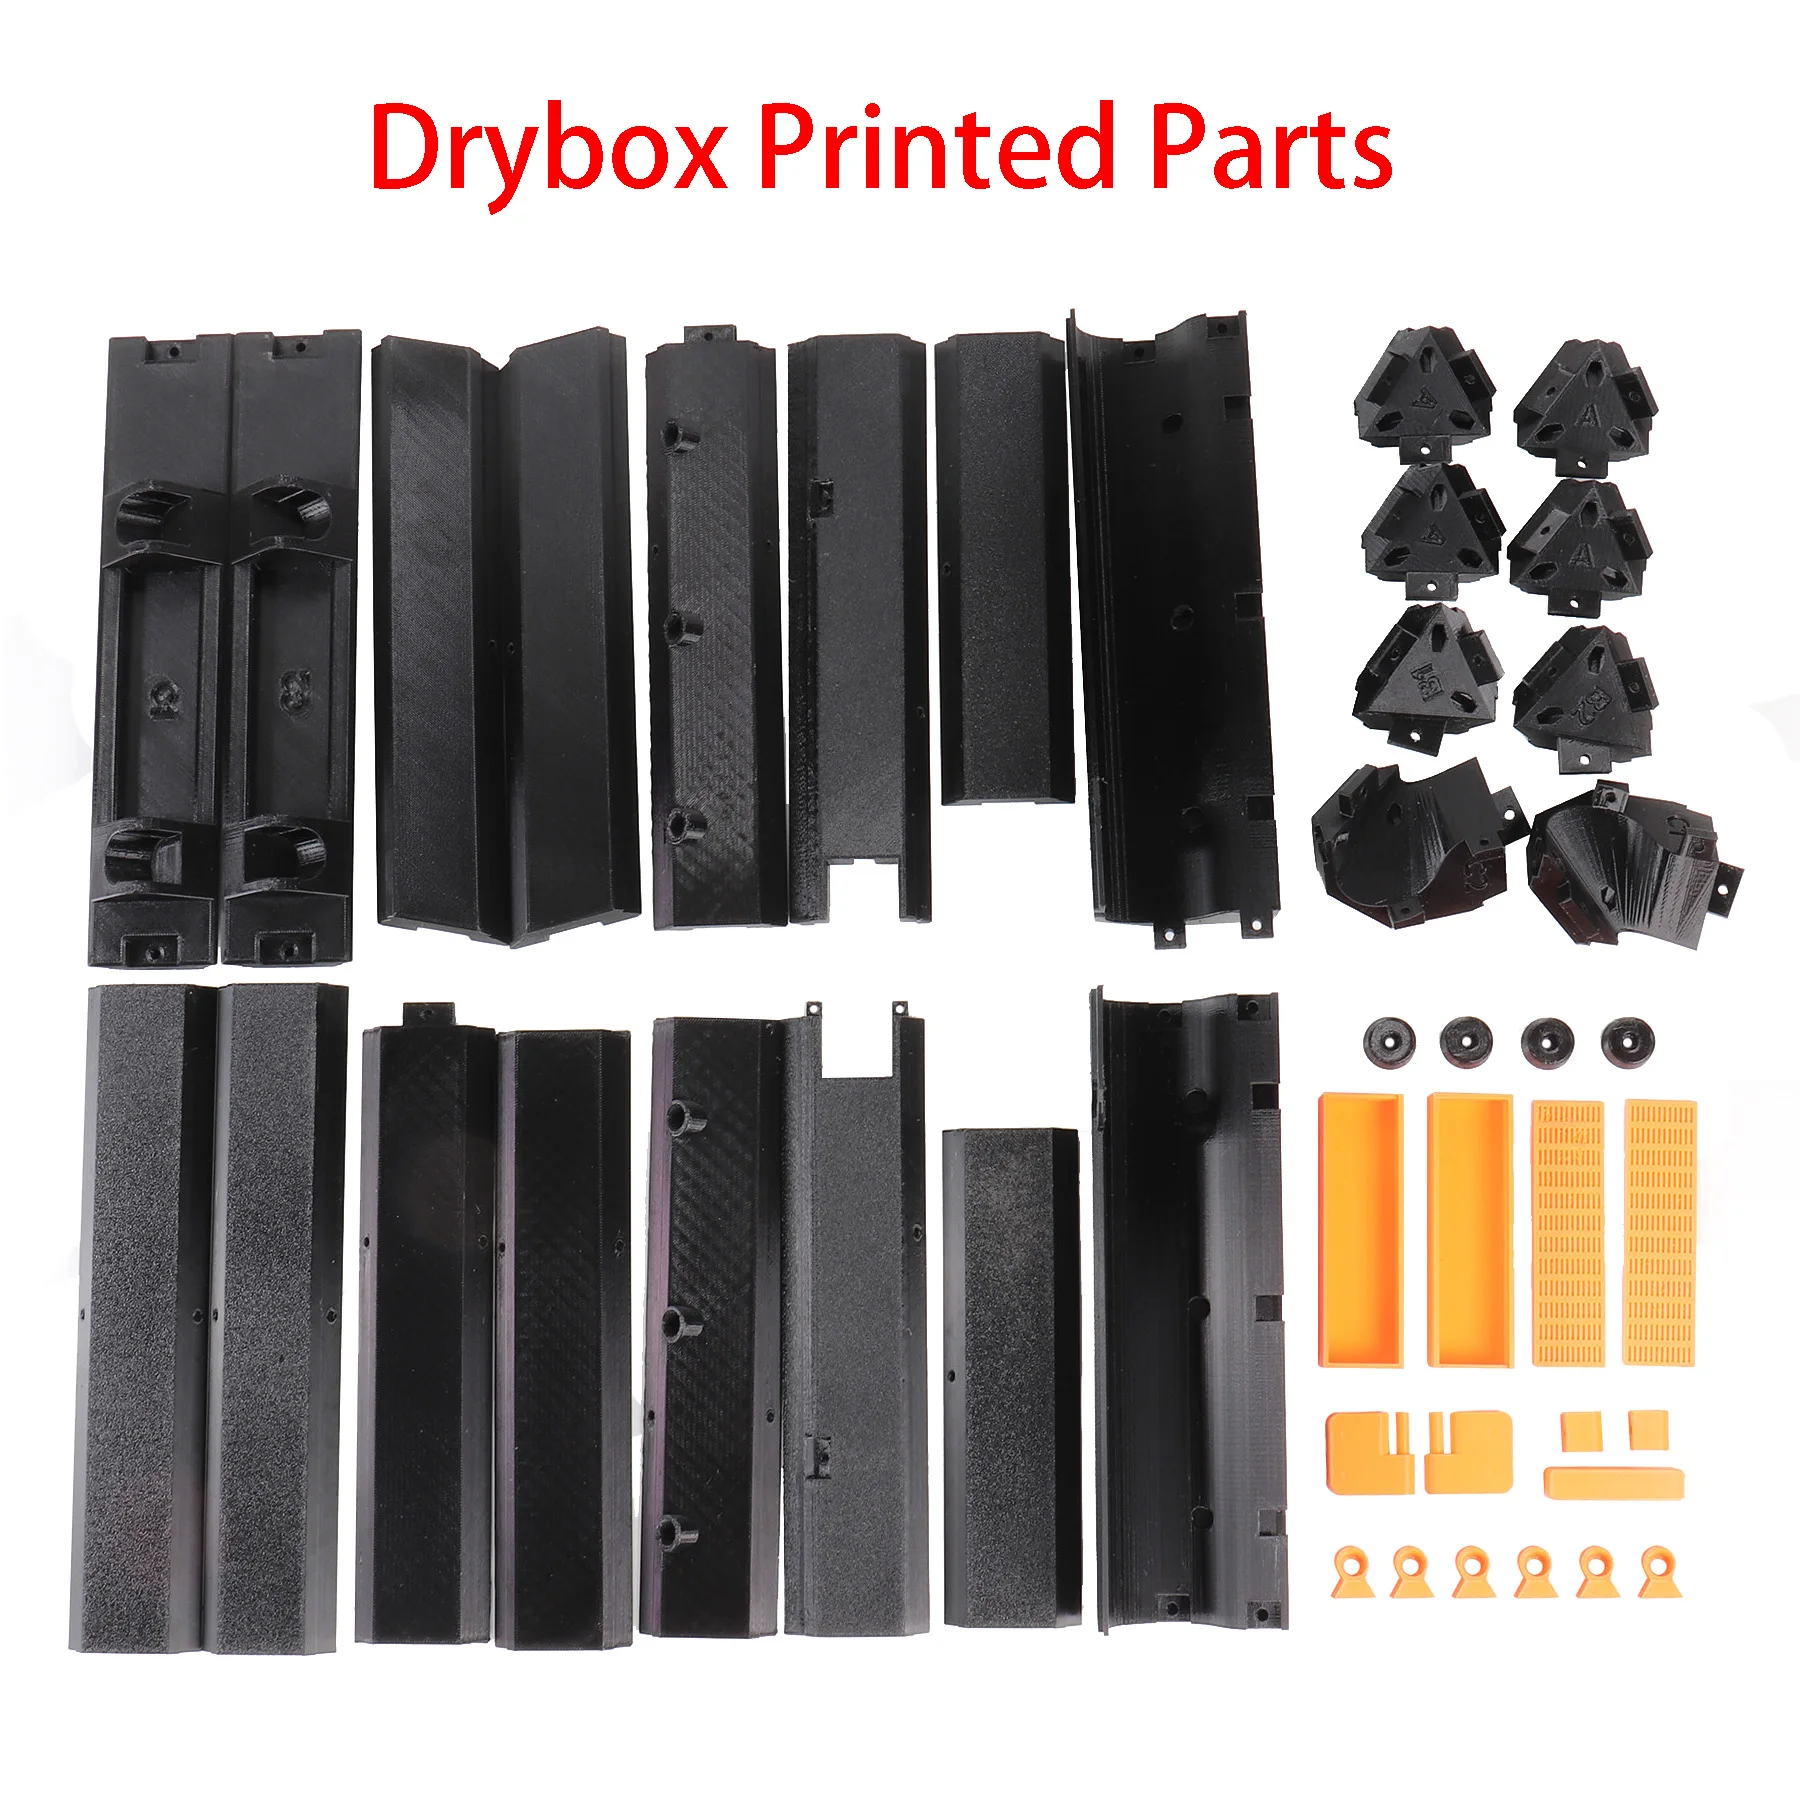 

Blurolls Unoriginal Prusa Drybox by Bram Elema Filament Box 3d Printed Parts PETG Filament Customized Colors For 3d Printer